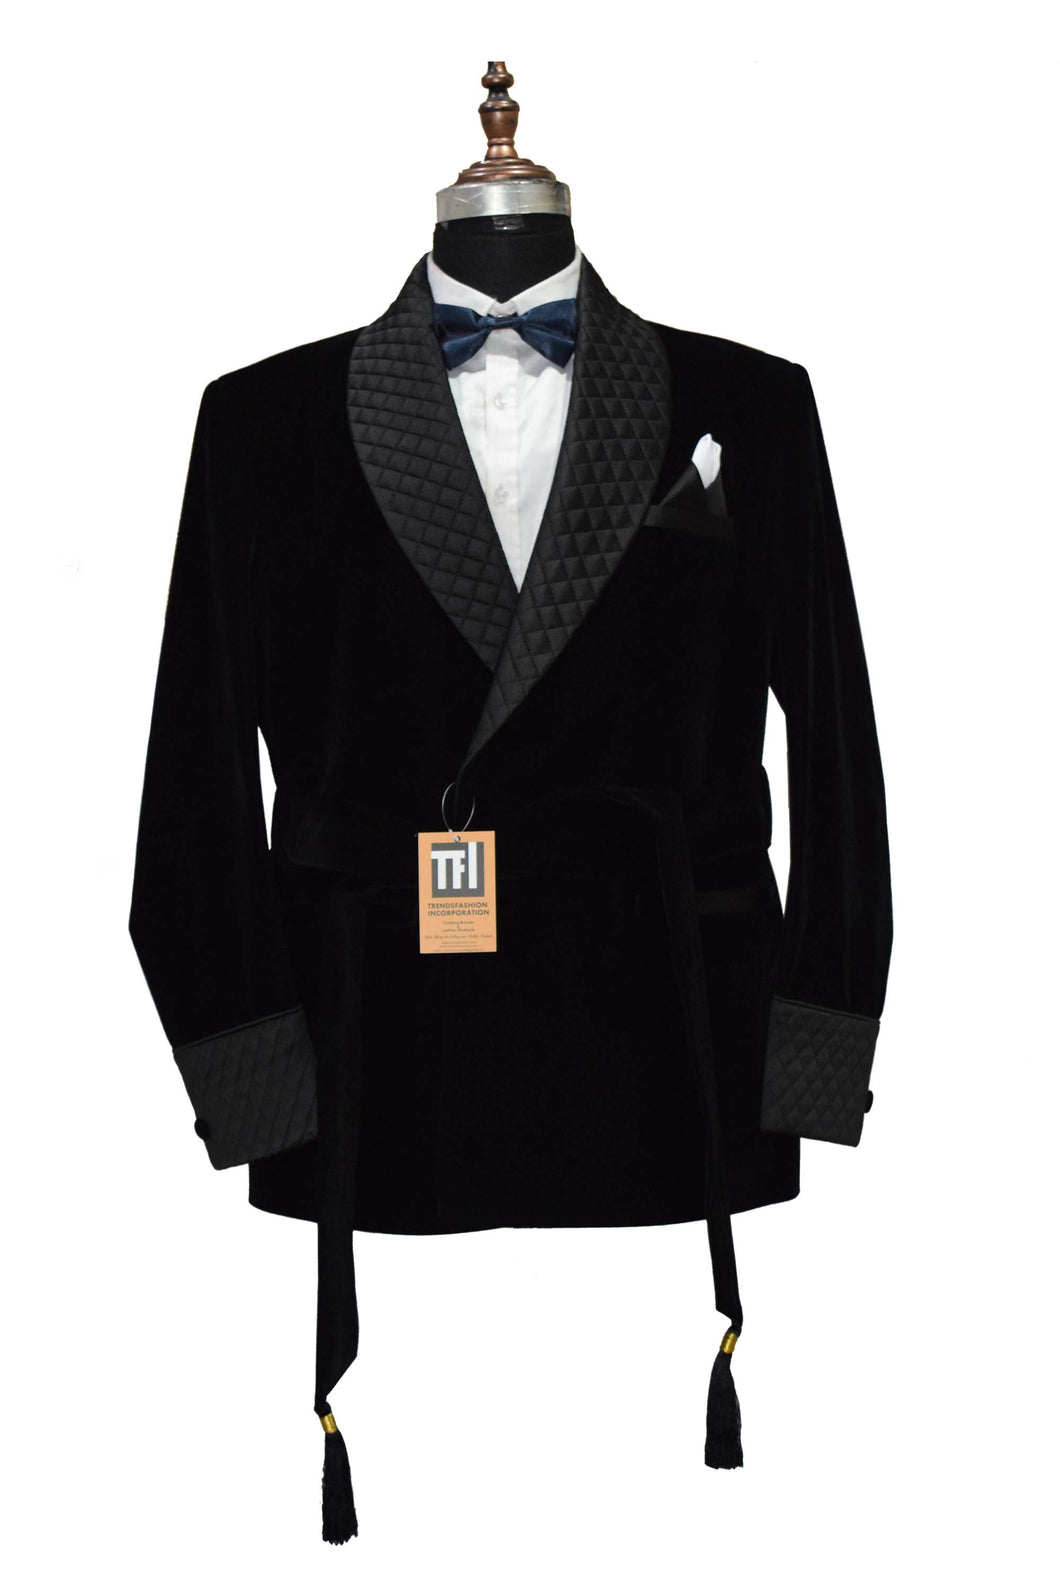 Man Black Smoking Jackets Robes Designer Party Wear Coat